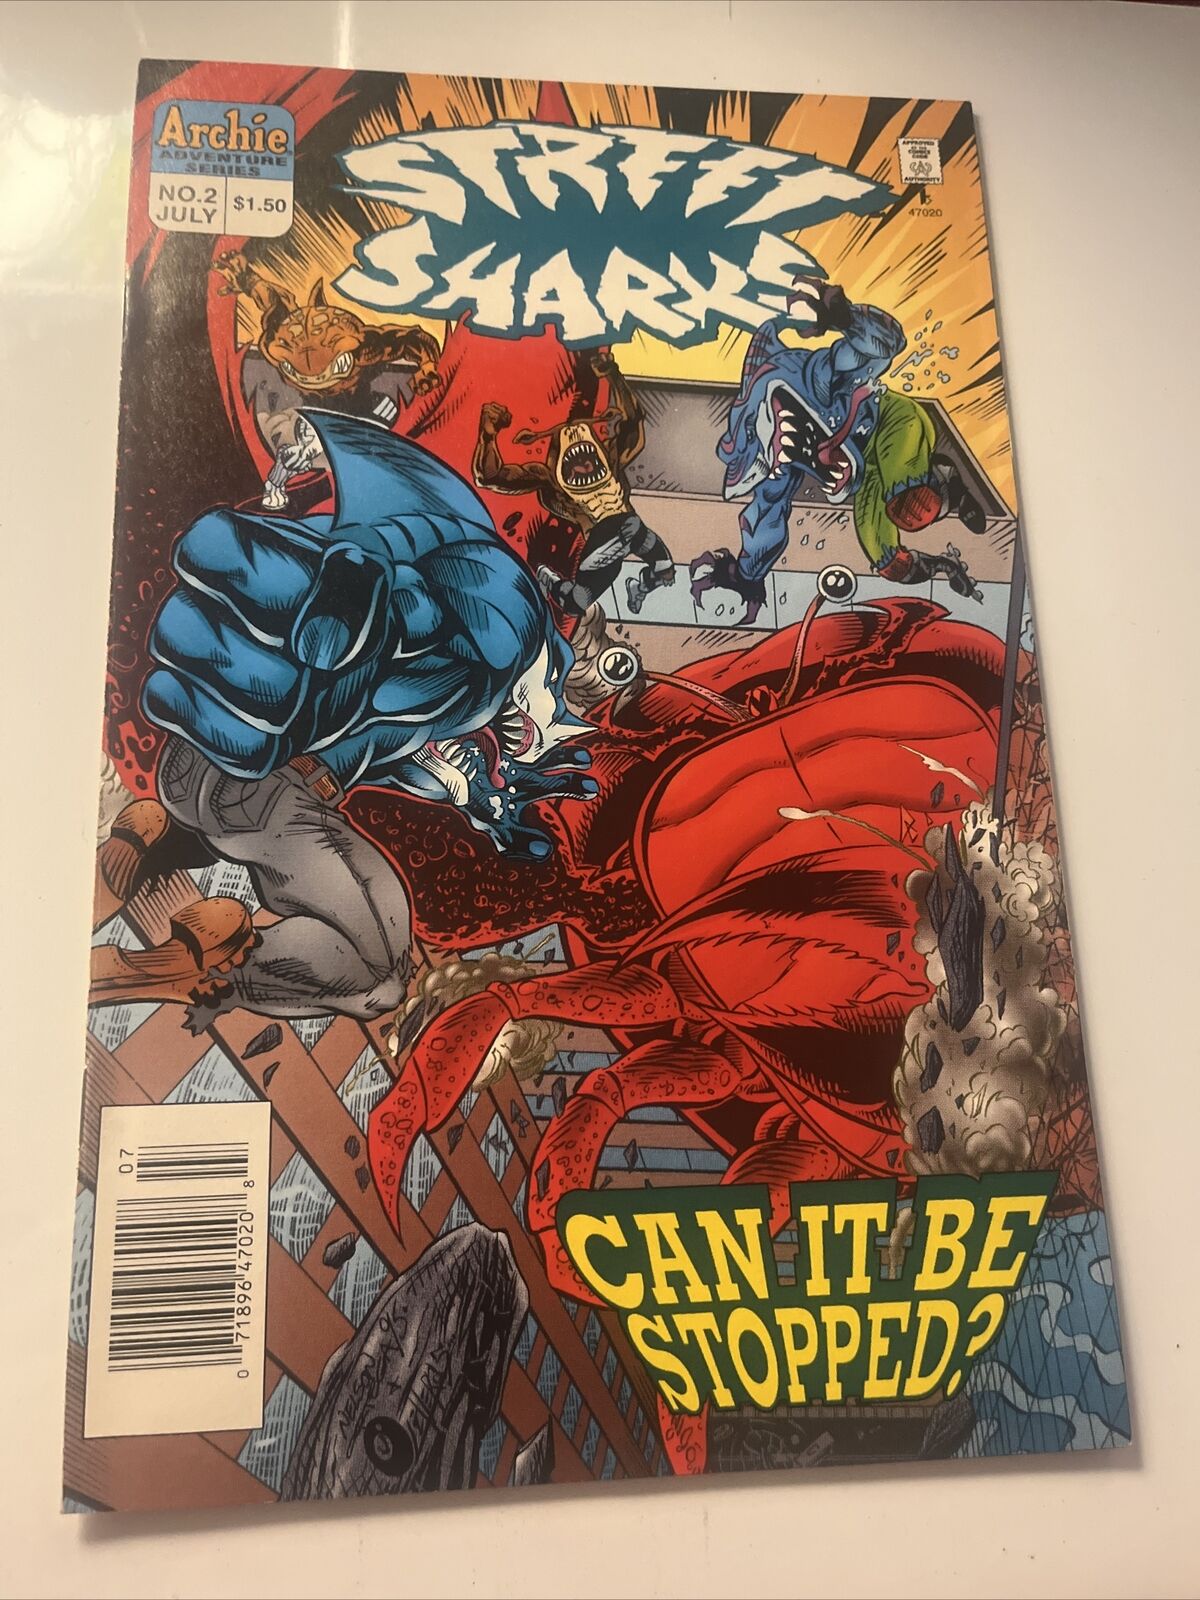 Street Sharks #2 (ARCHIE COMICS Publications, Inc. July 1996) RARE Newsstand